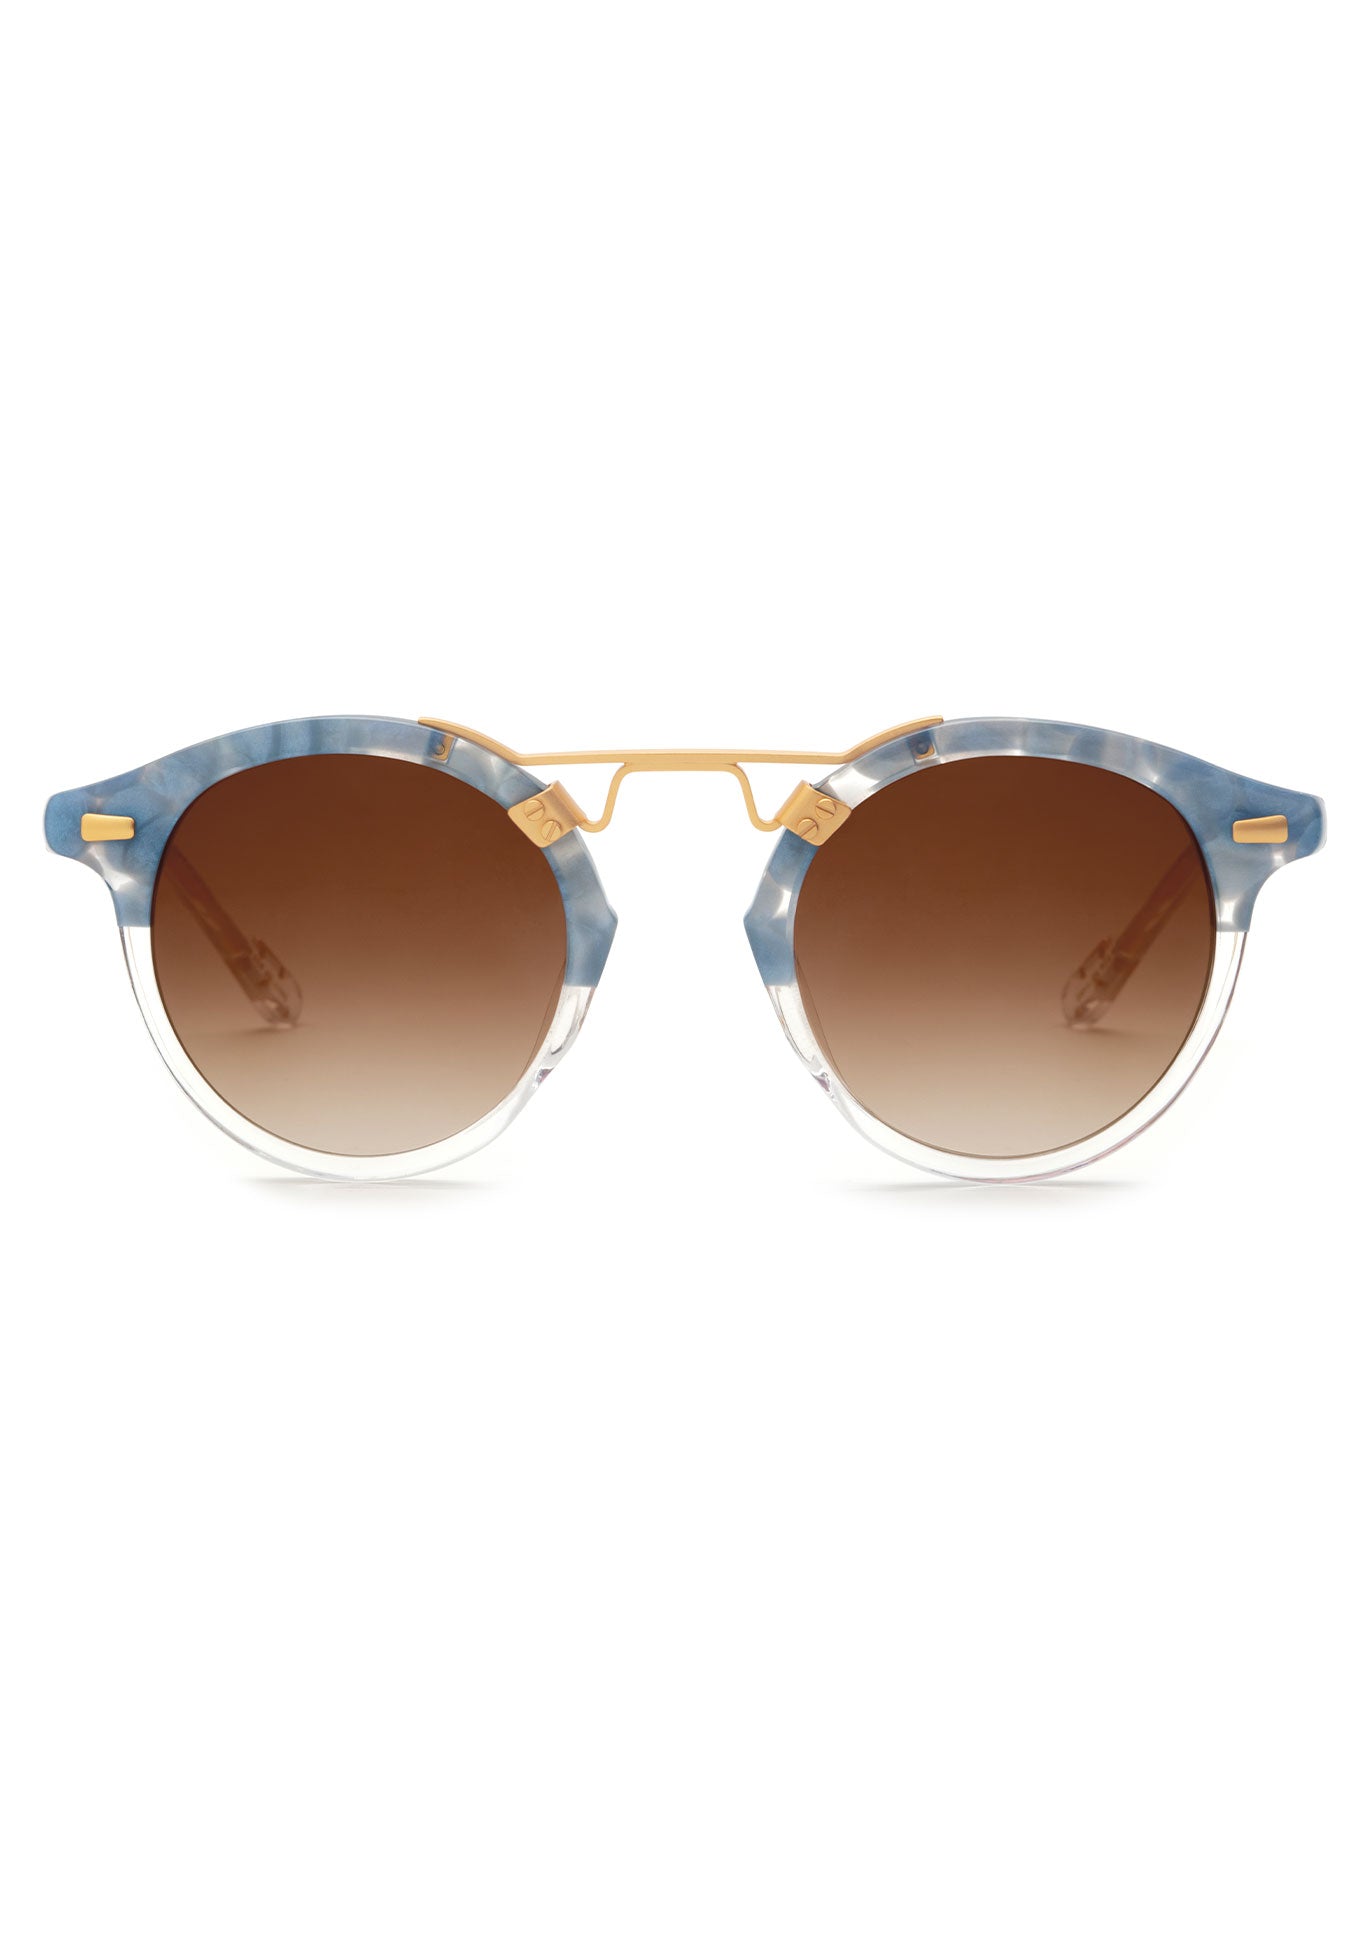 St. Louis 24K Polarized Round Sunglasses, 46mm